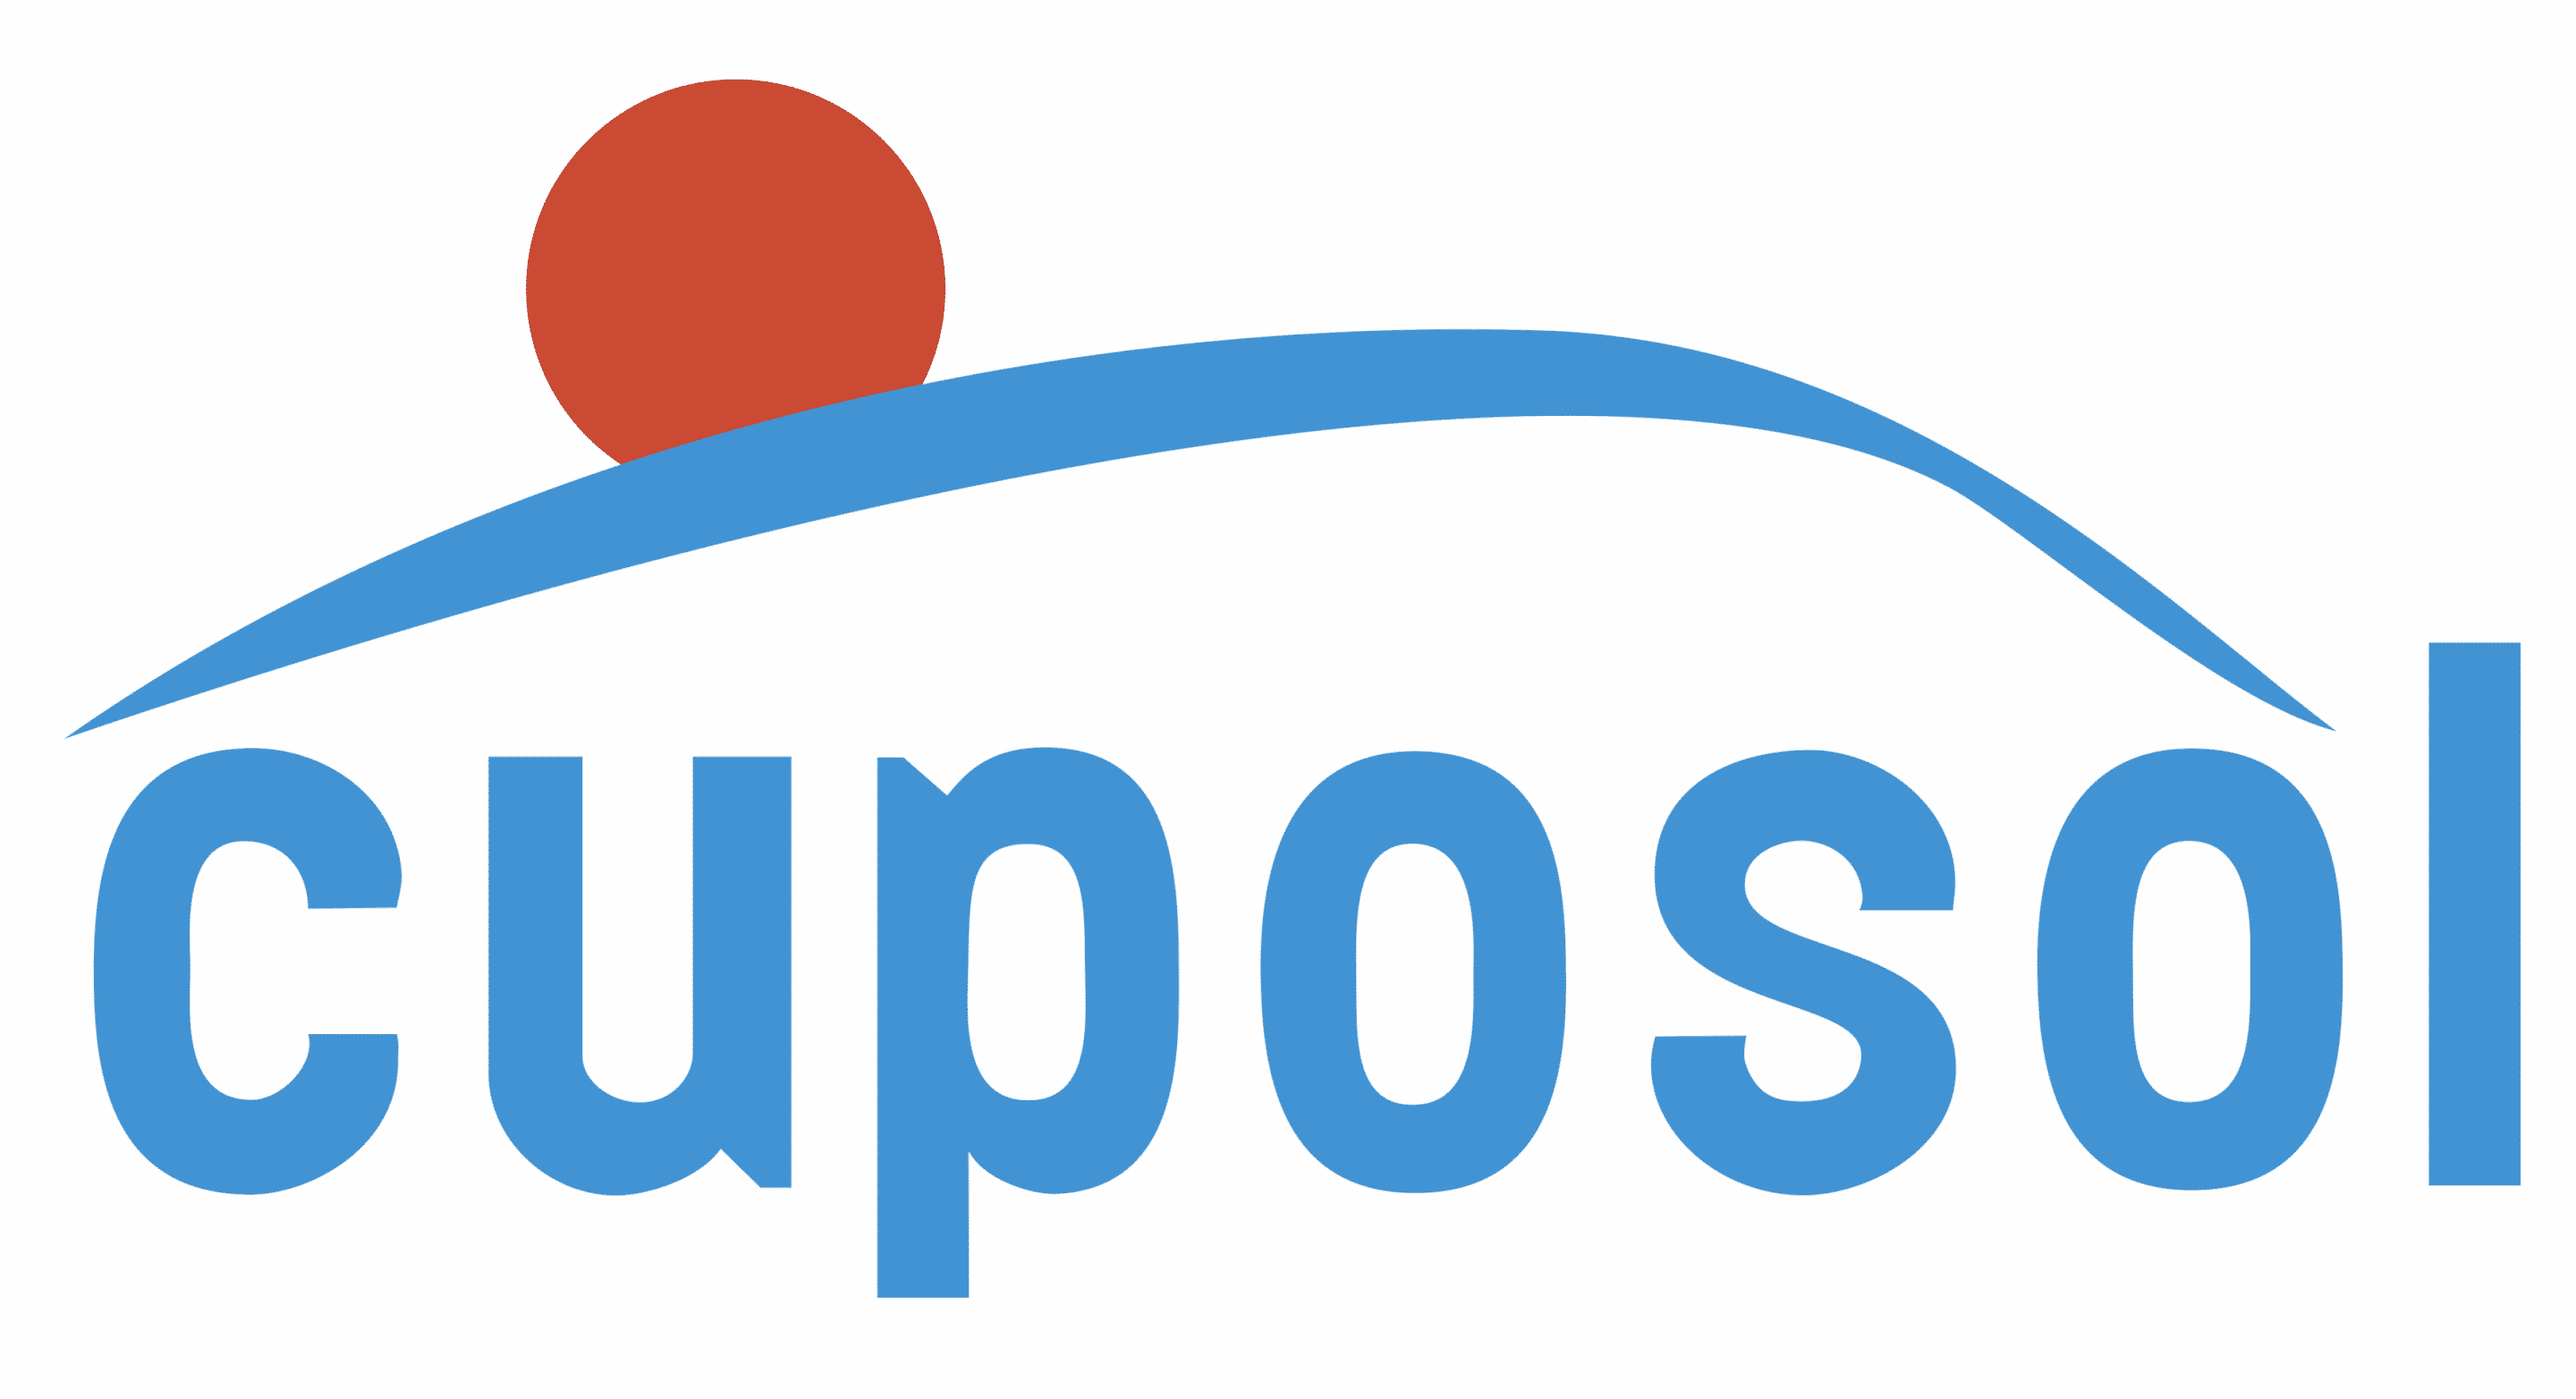 Cuposol